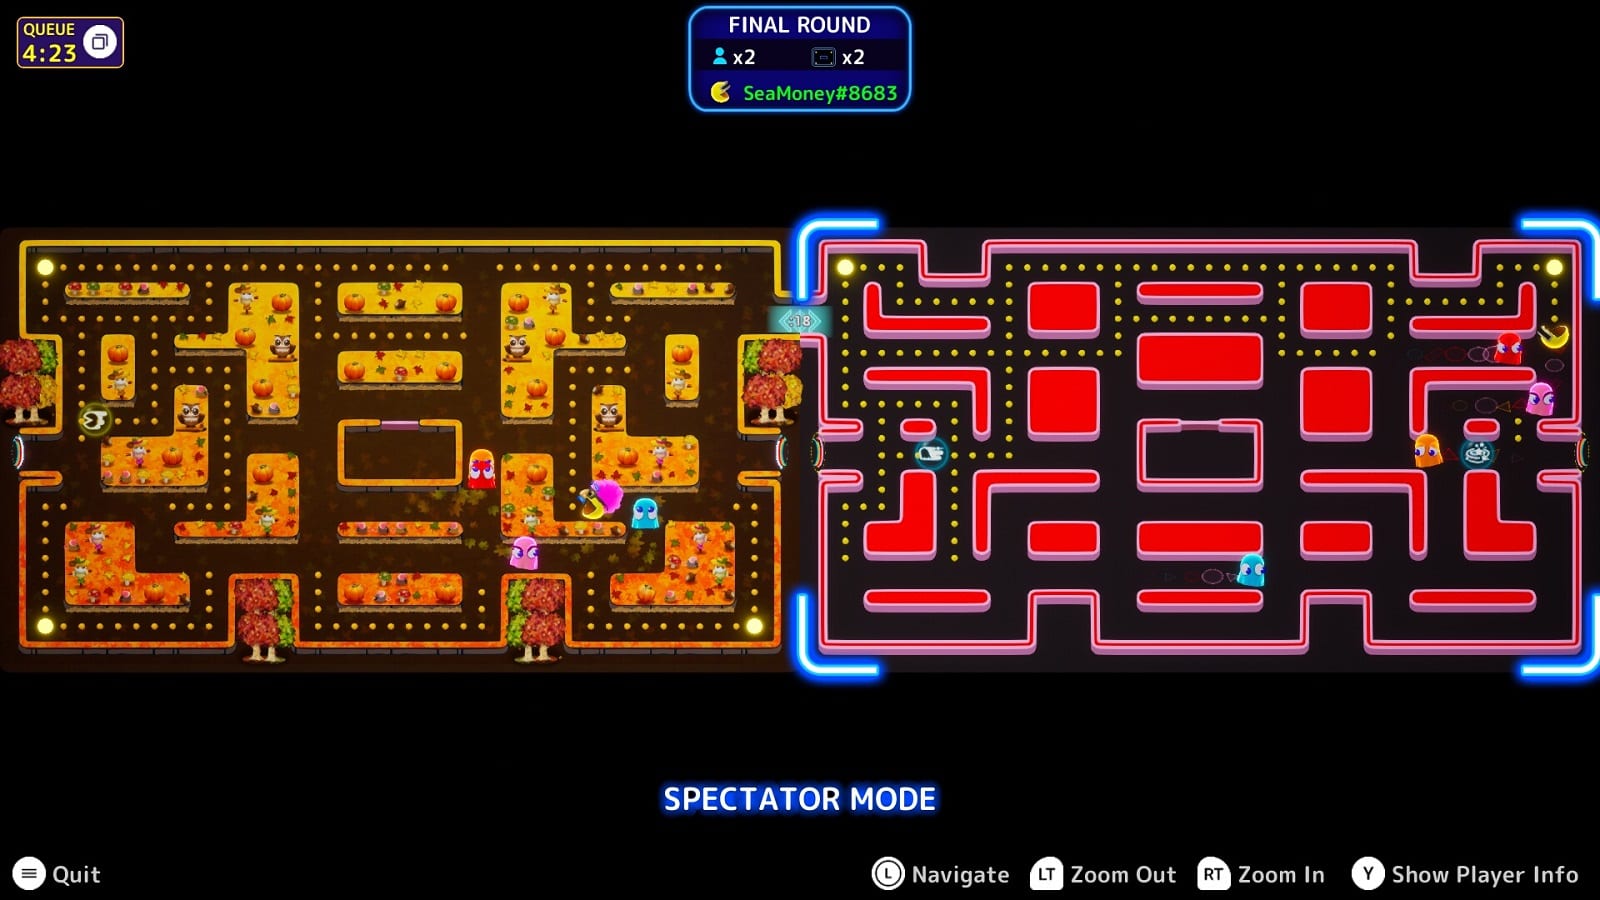 Pac-Man Mega Tunnel Battle: Stadia-exclusive battle royale - 9to5Google